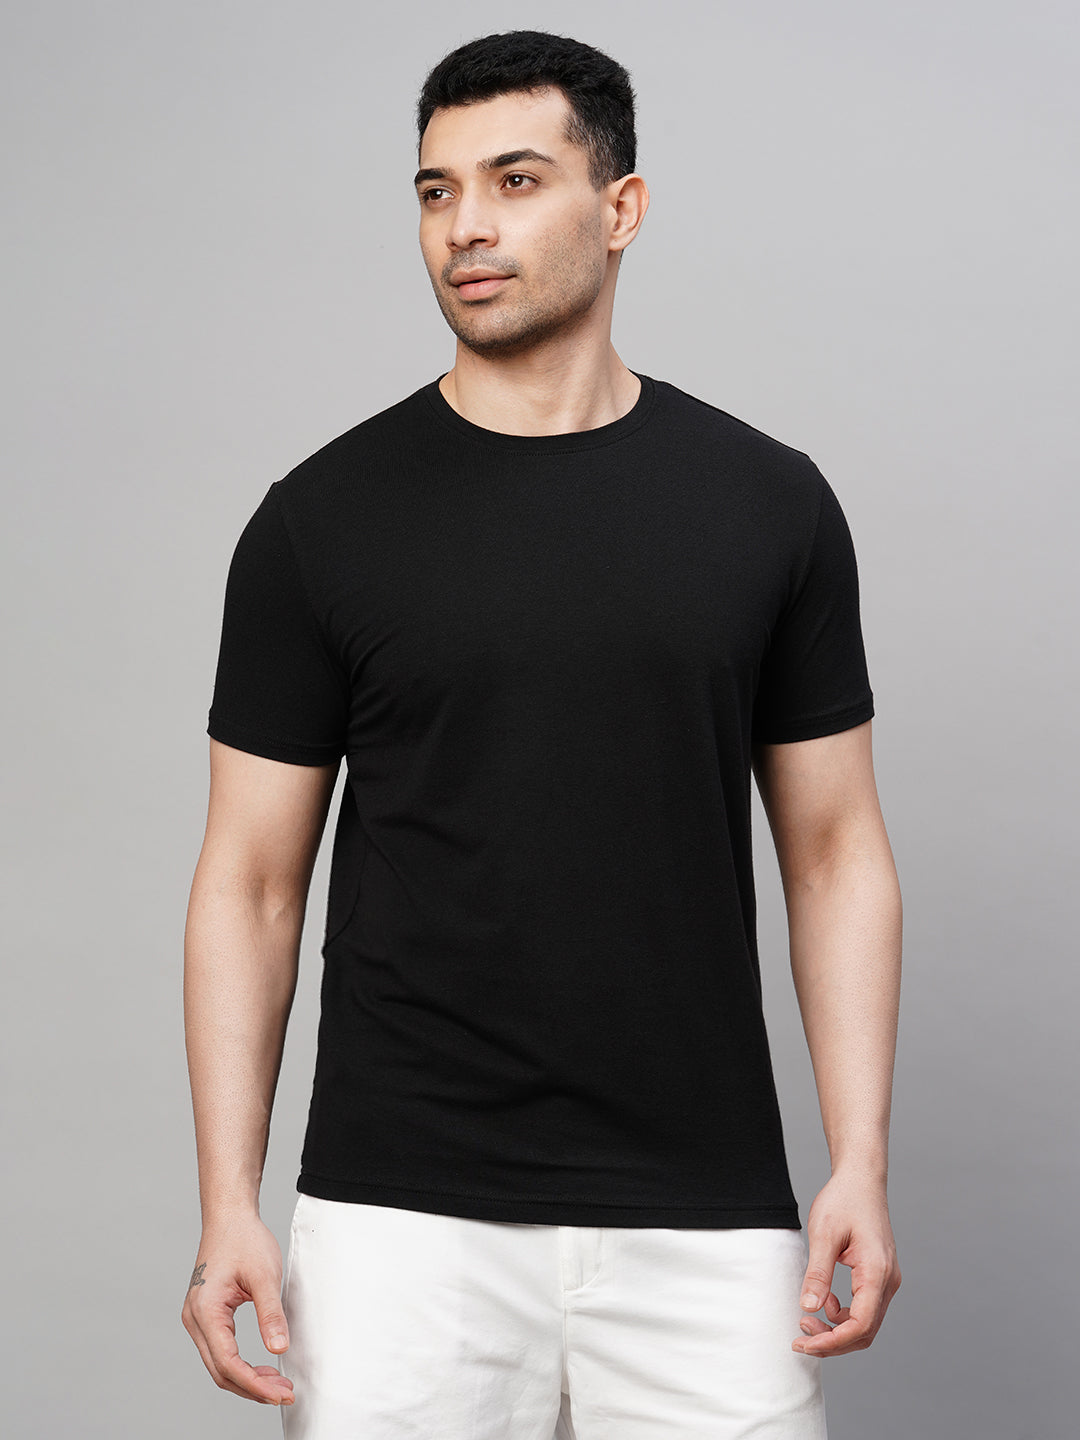 Men's Black Cotton Bamboo Elastane Regular Fit Tshirt